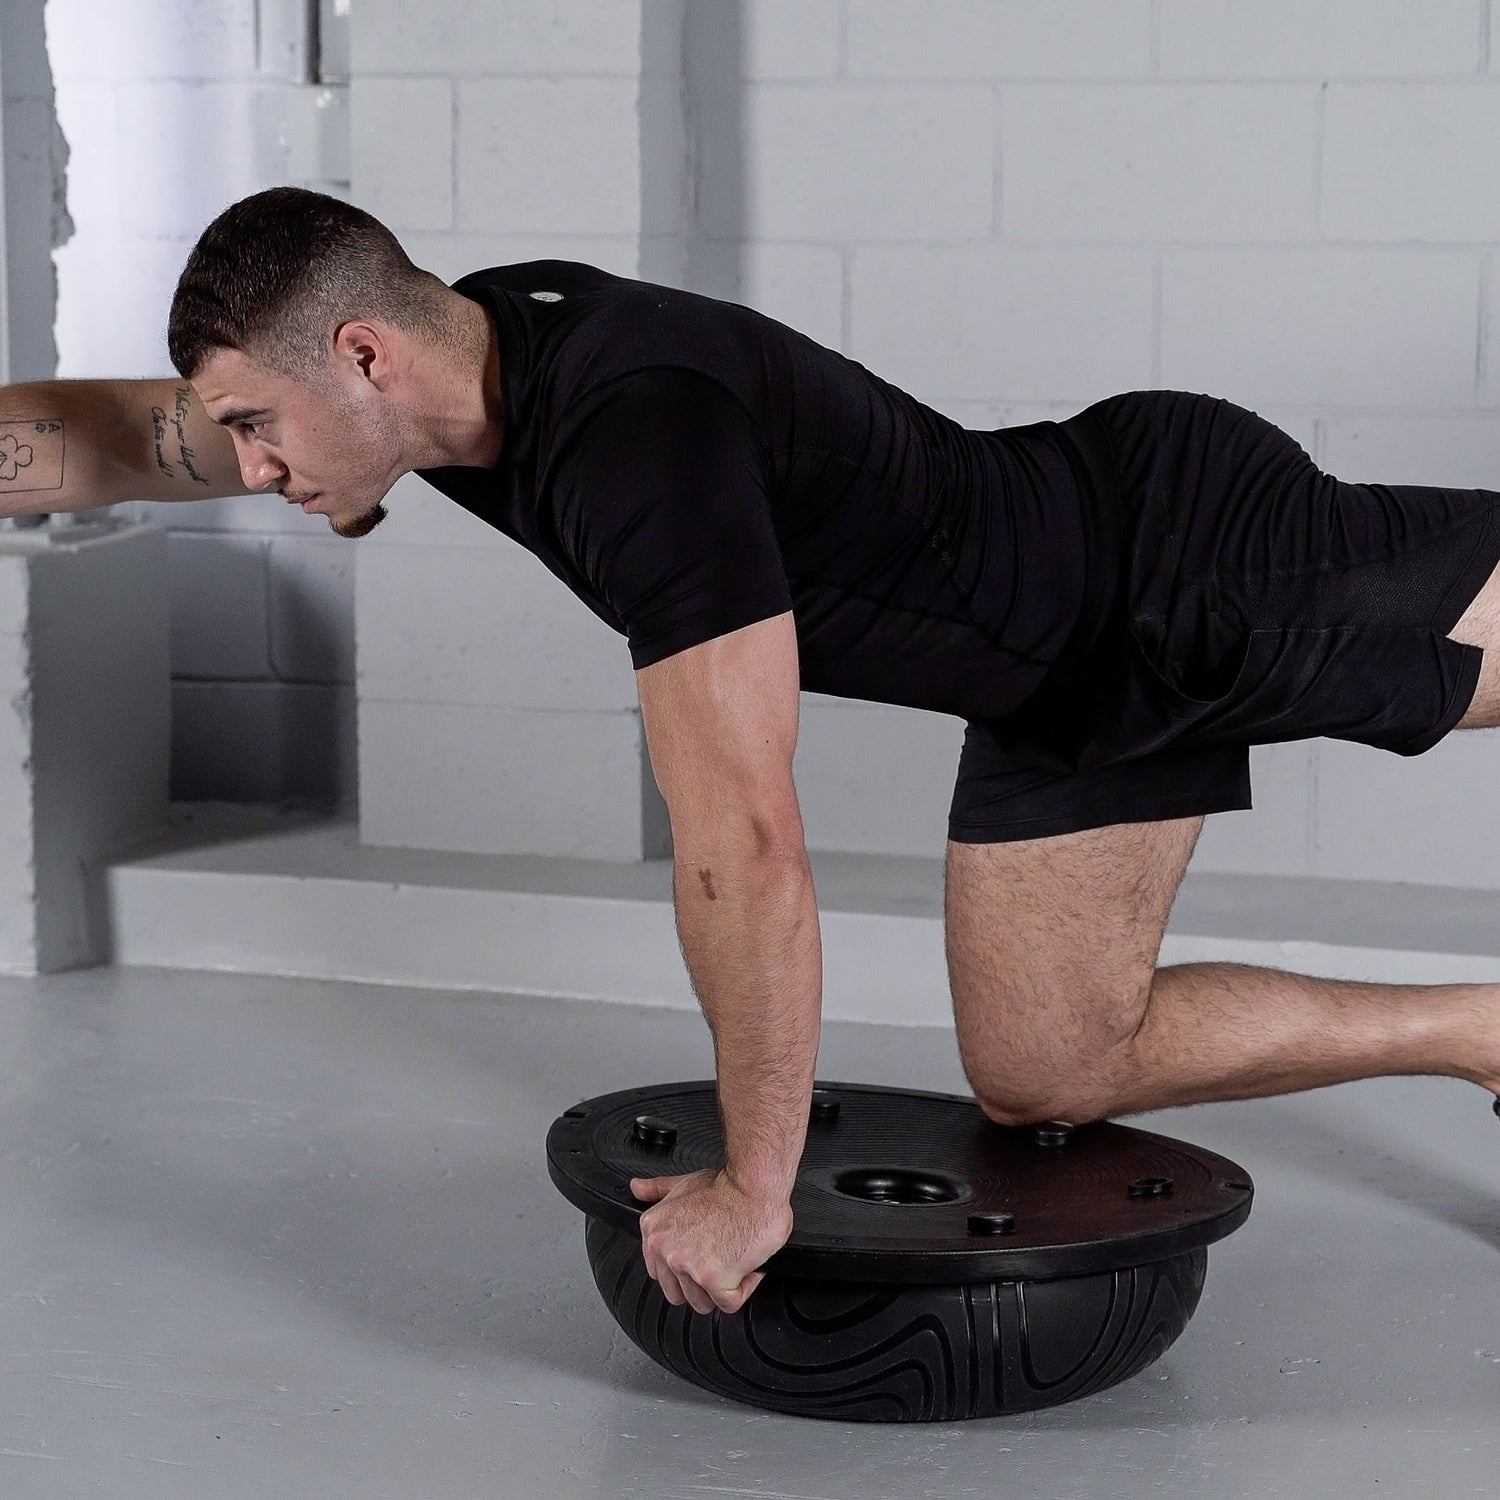 Yoga-Inspired Balance Exercise on Underside of TRNR Balance Trainer